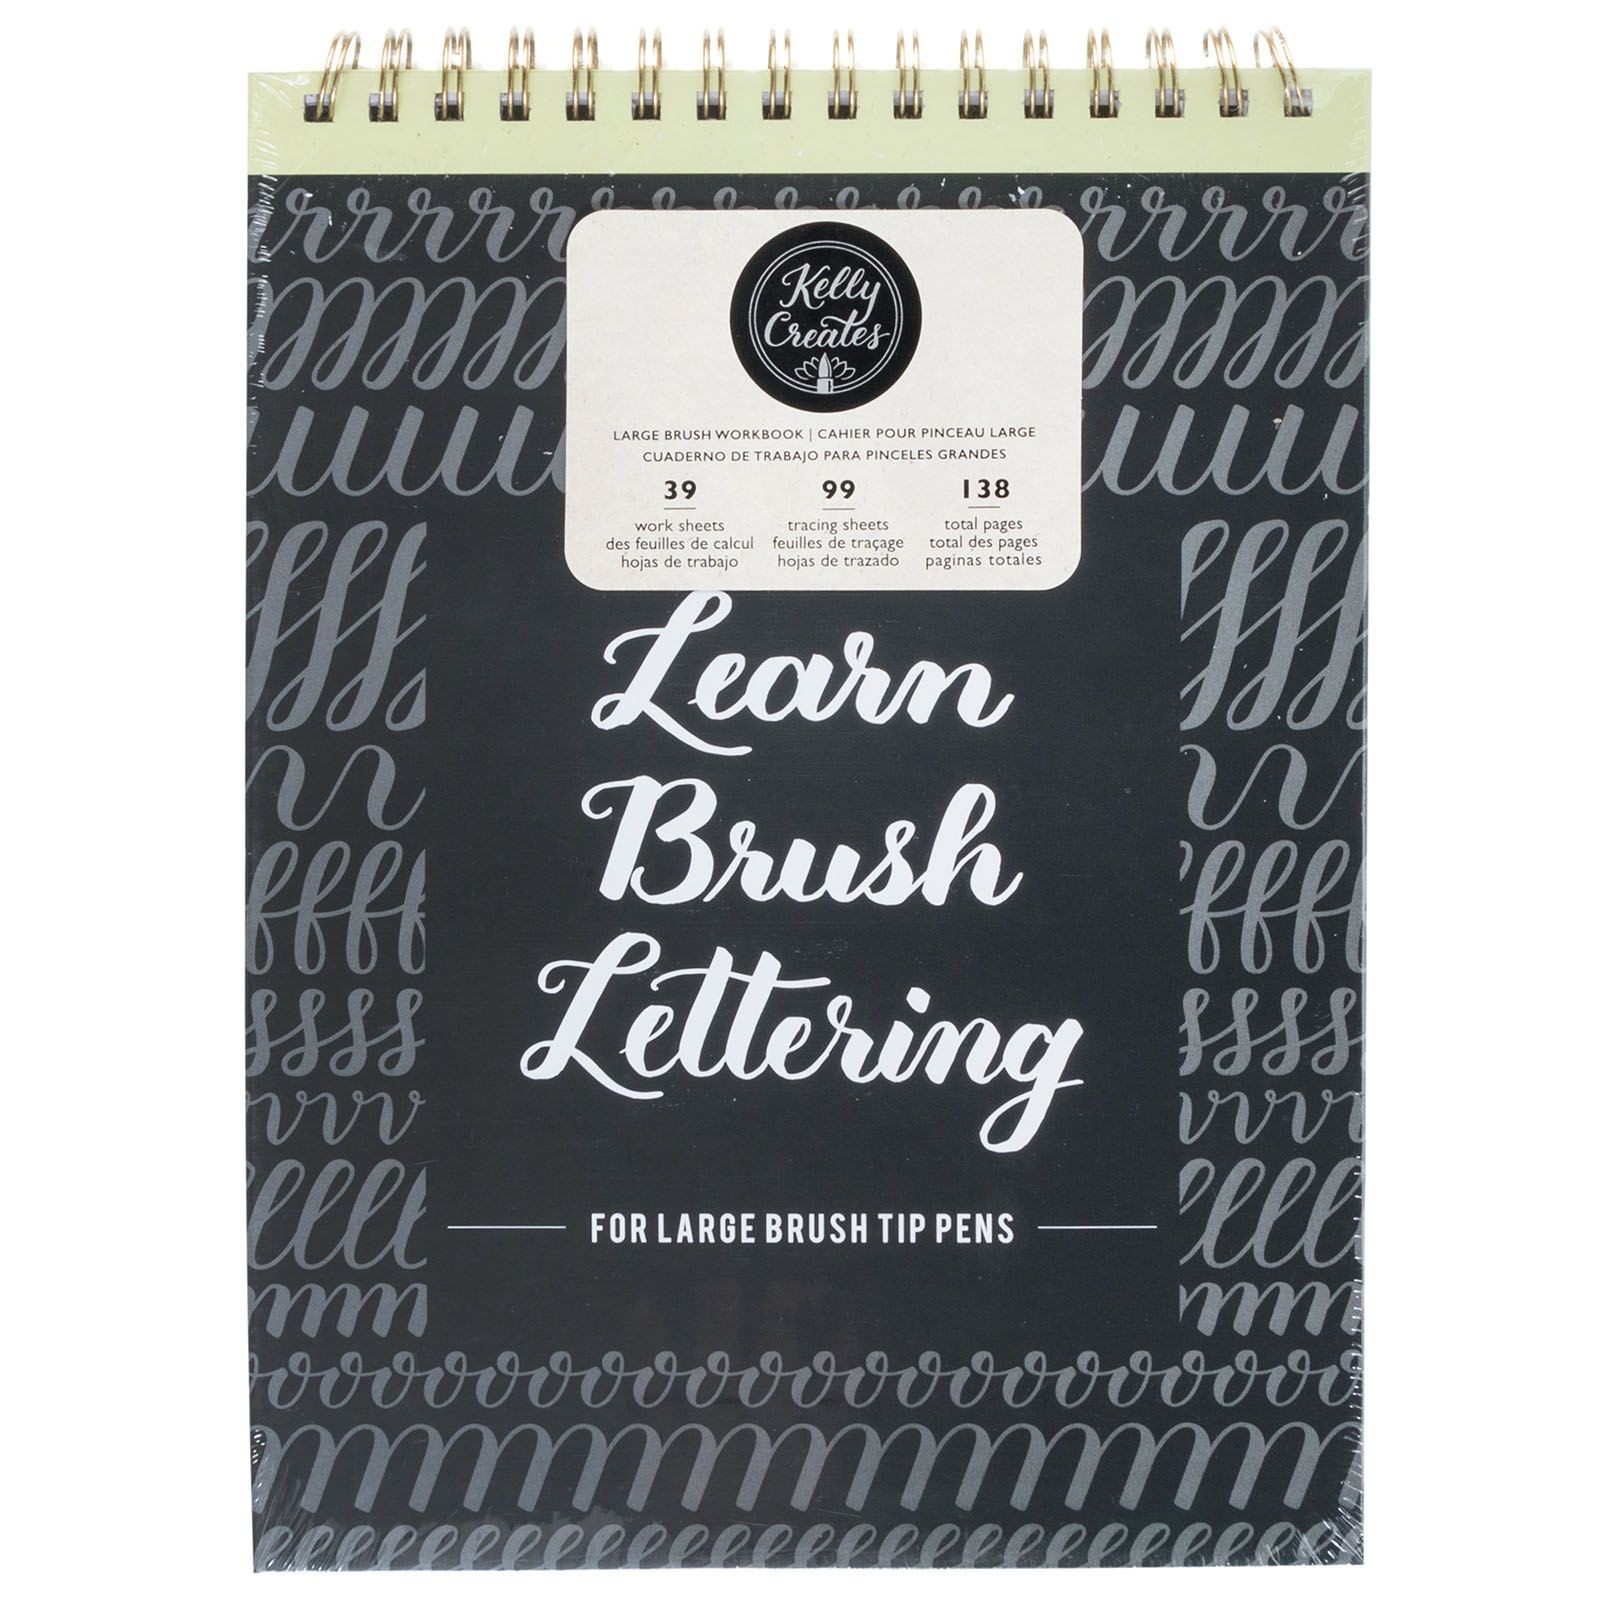 Learn Brush Lettering Kelly Creates large brush workbook 138 Seiten